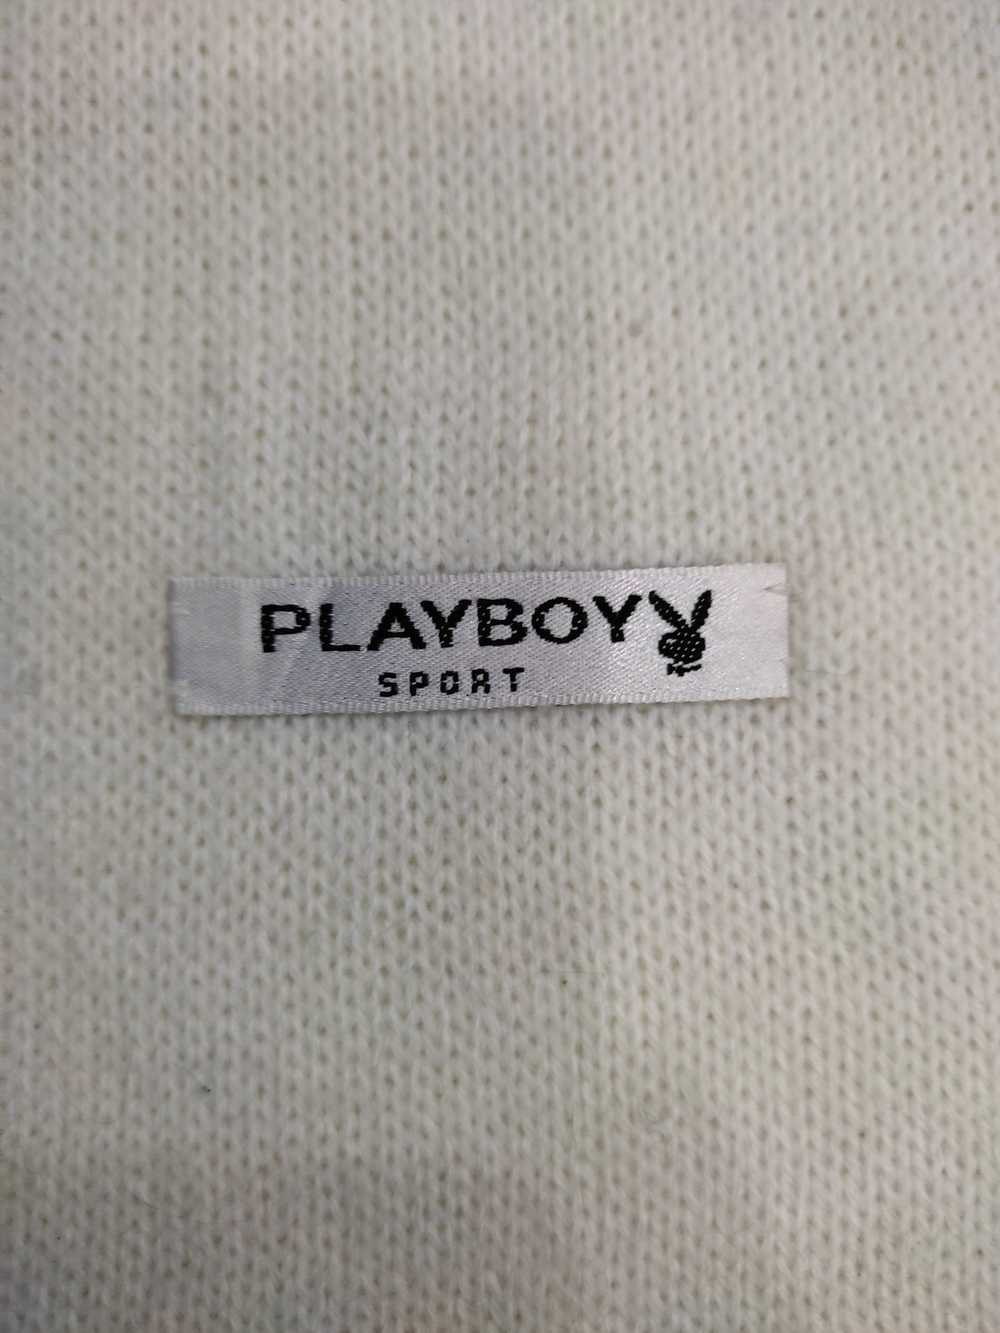 Playboy Vintage Playboy scarf - image 2